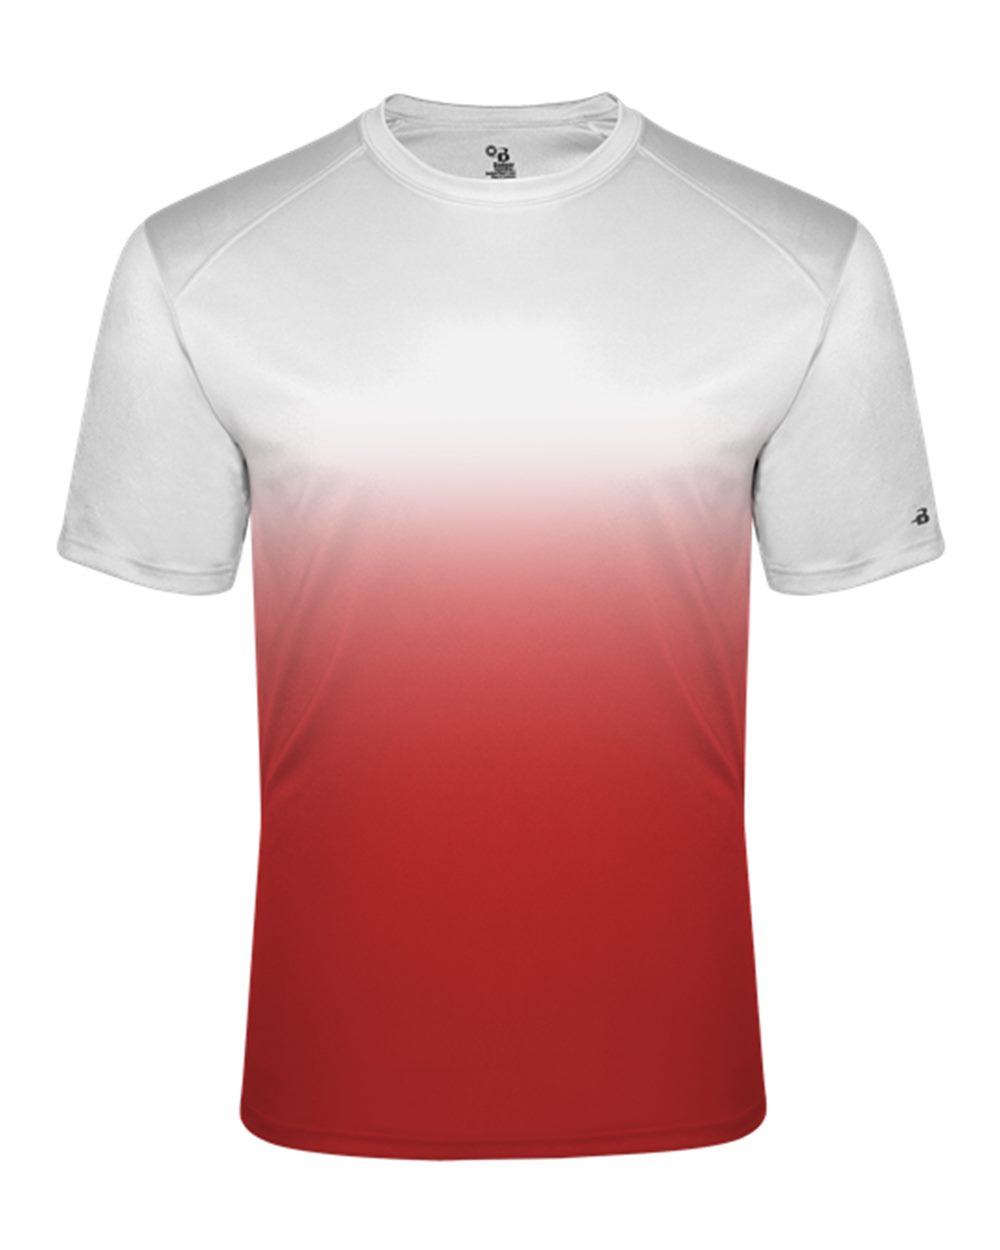 C2 Sport - Women's Performance Short Sleeve T-Shirt - 5600 - Century  Marketing, Inc.